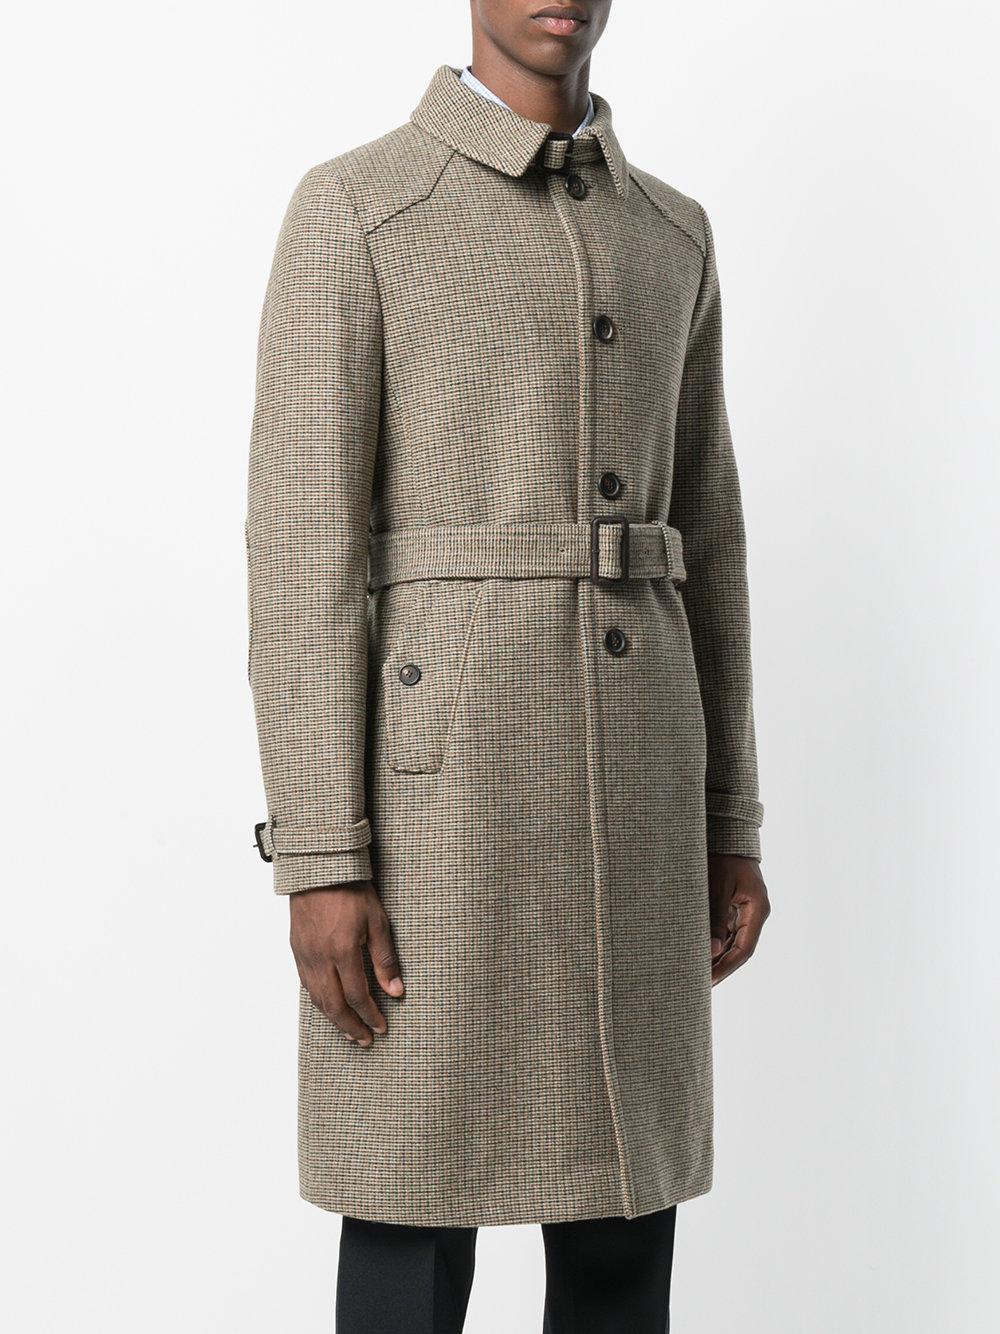 Lyst - Prada Belted Check Tweed Coat in Natural for Men